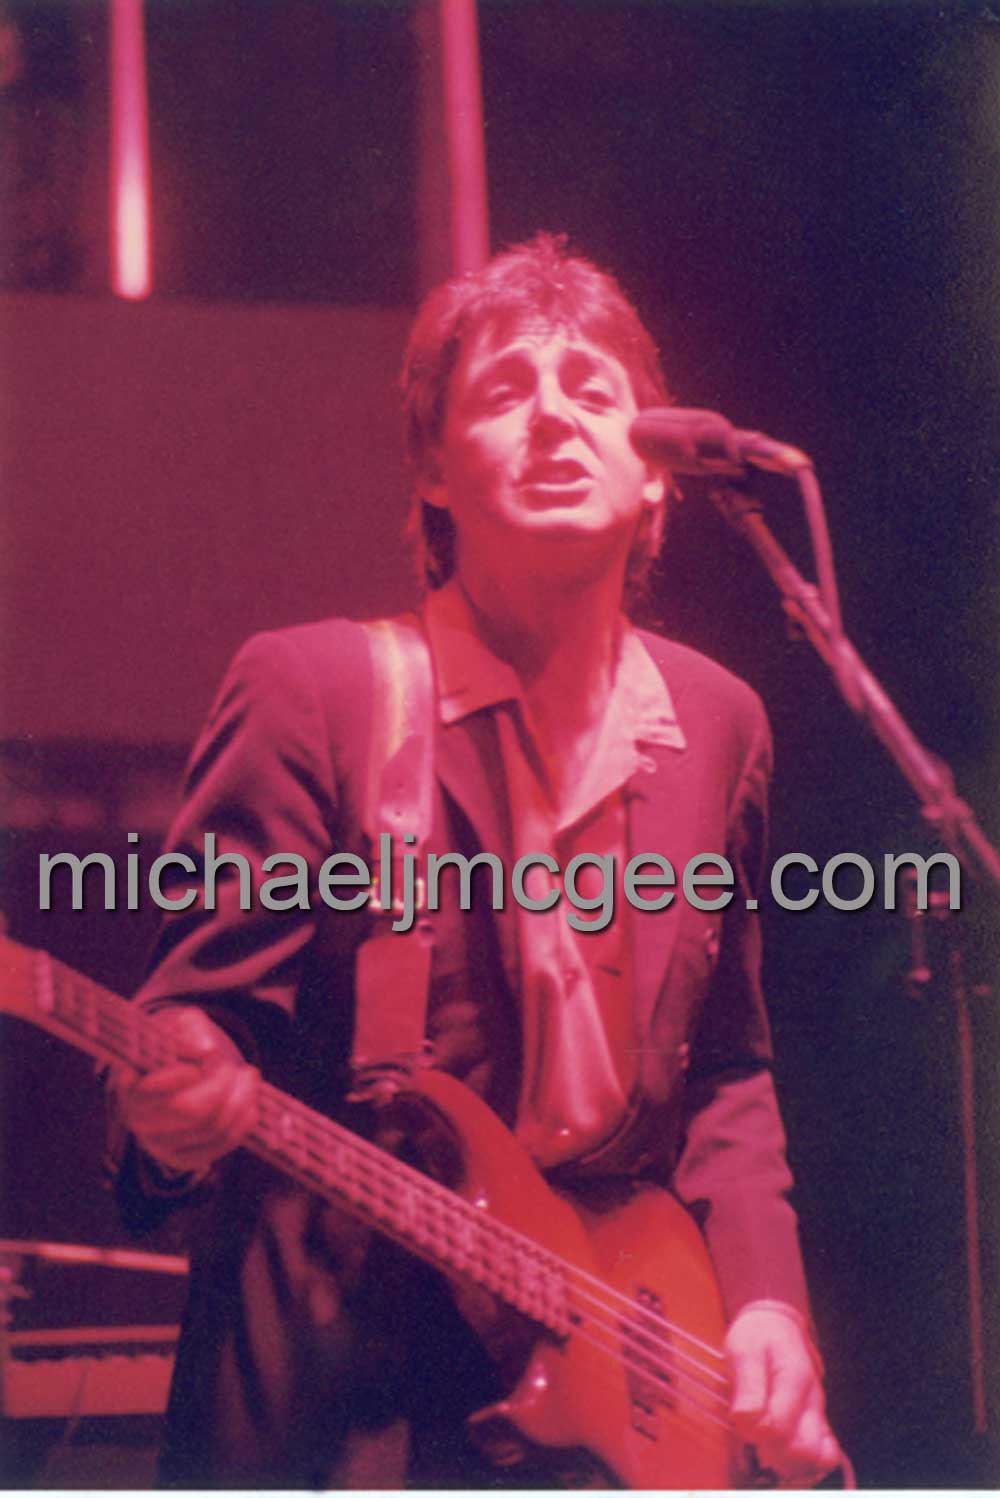 Paul McCartney / michaeljmcgee.com